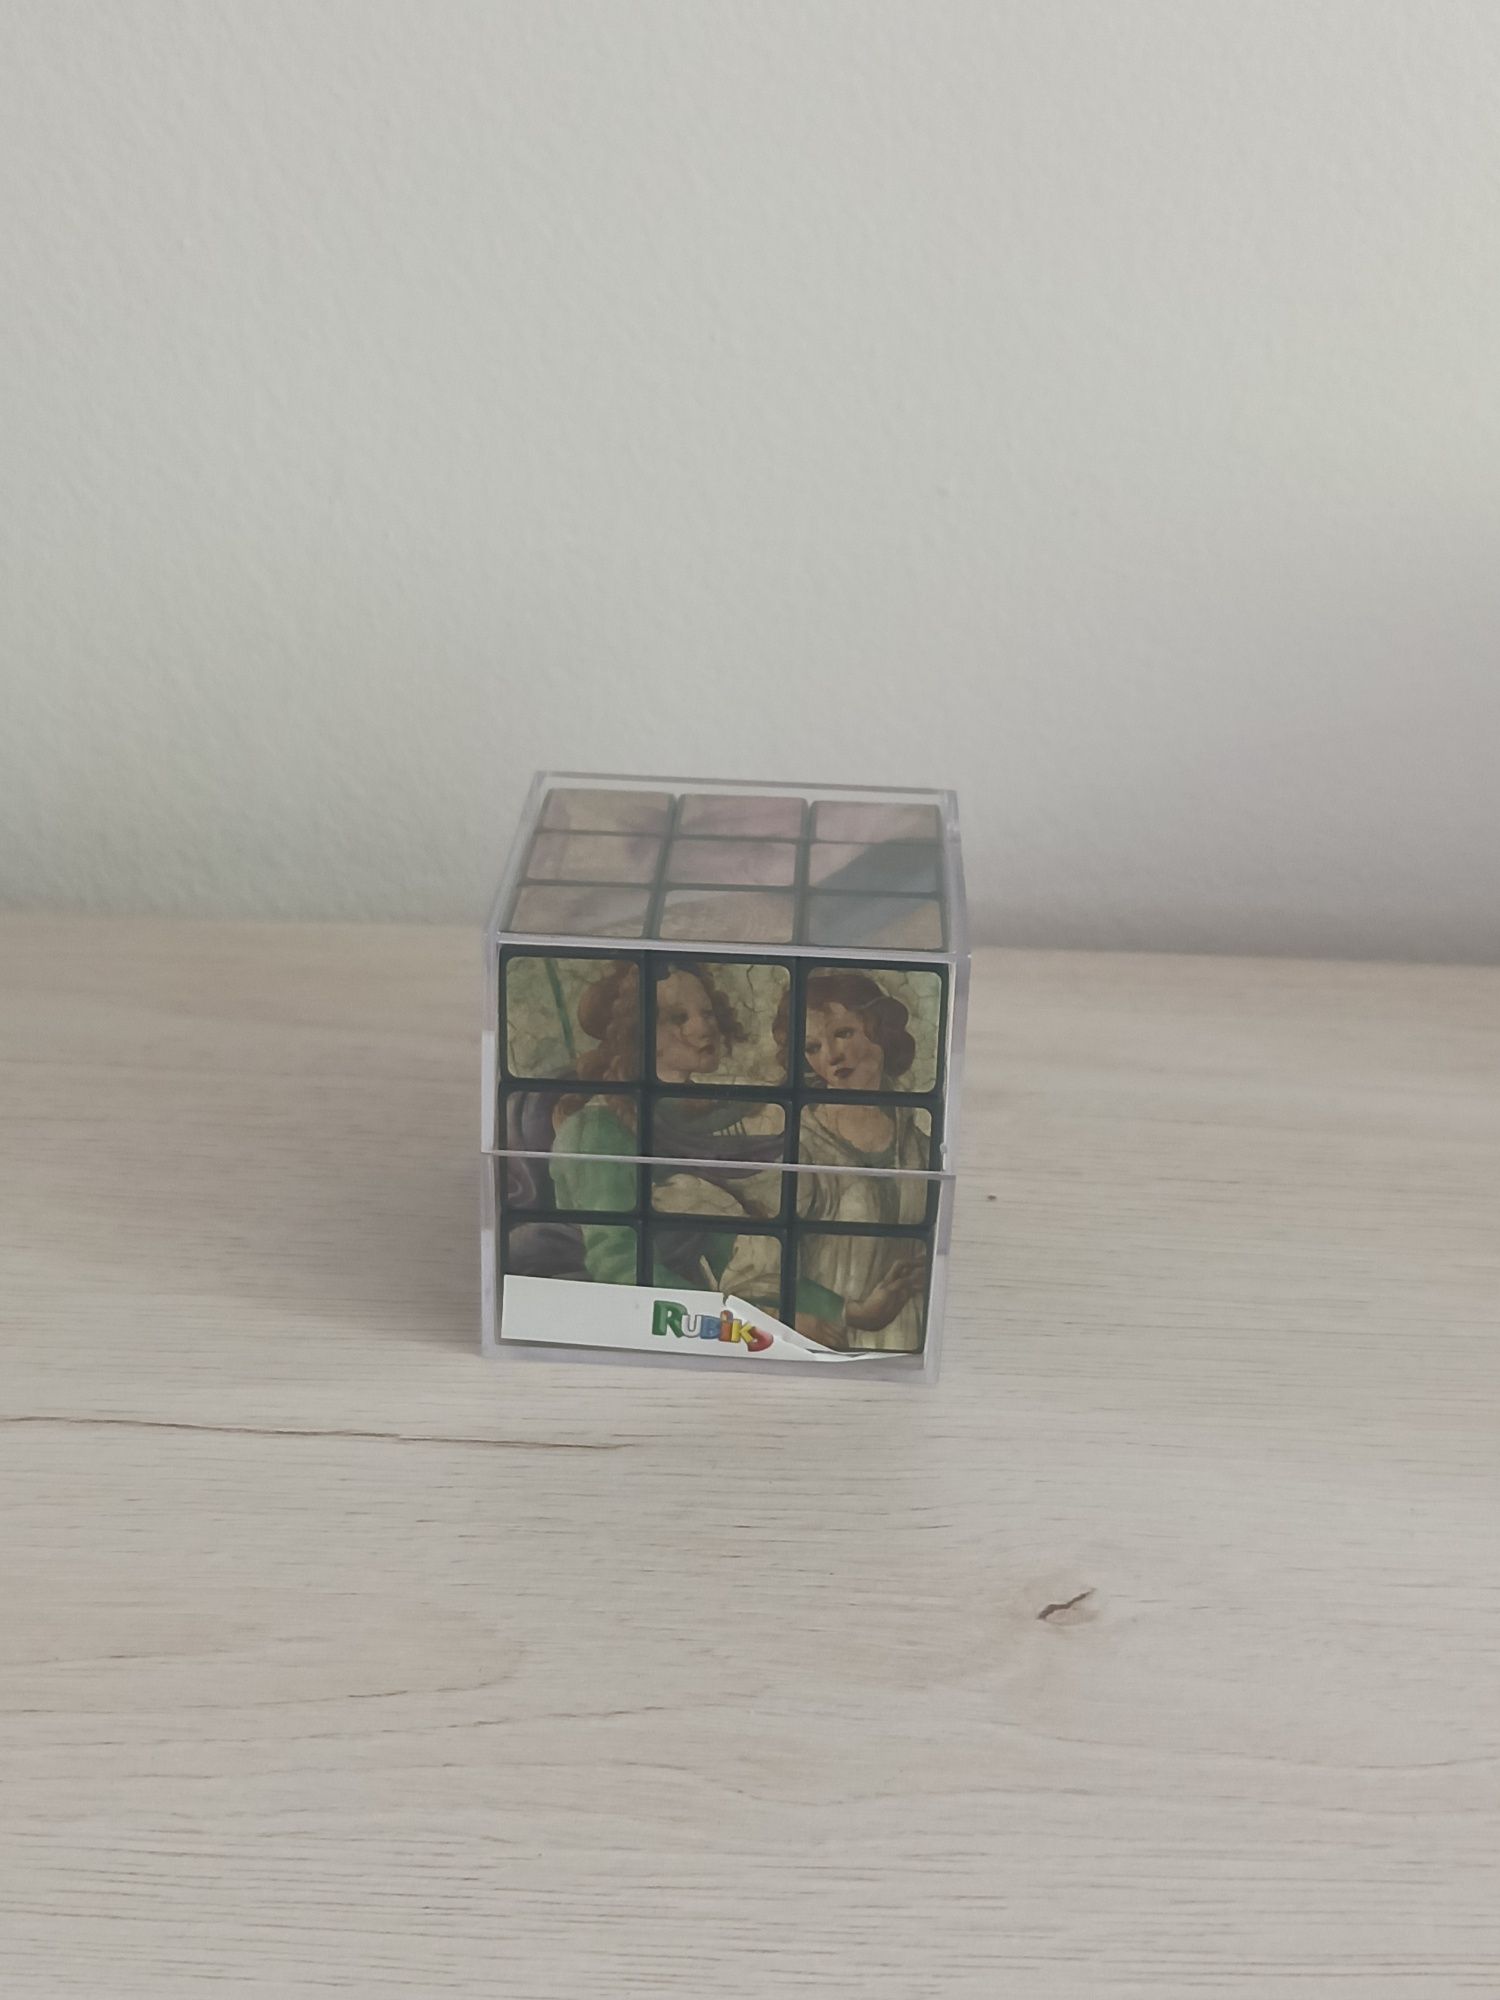 Kostka Rubika z obrazkami